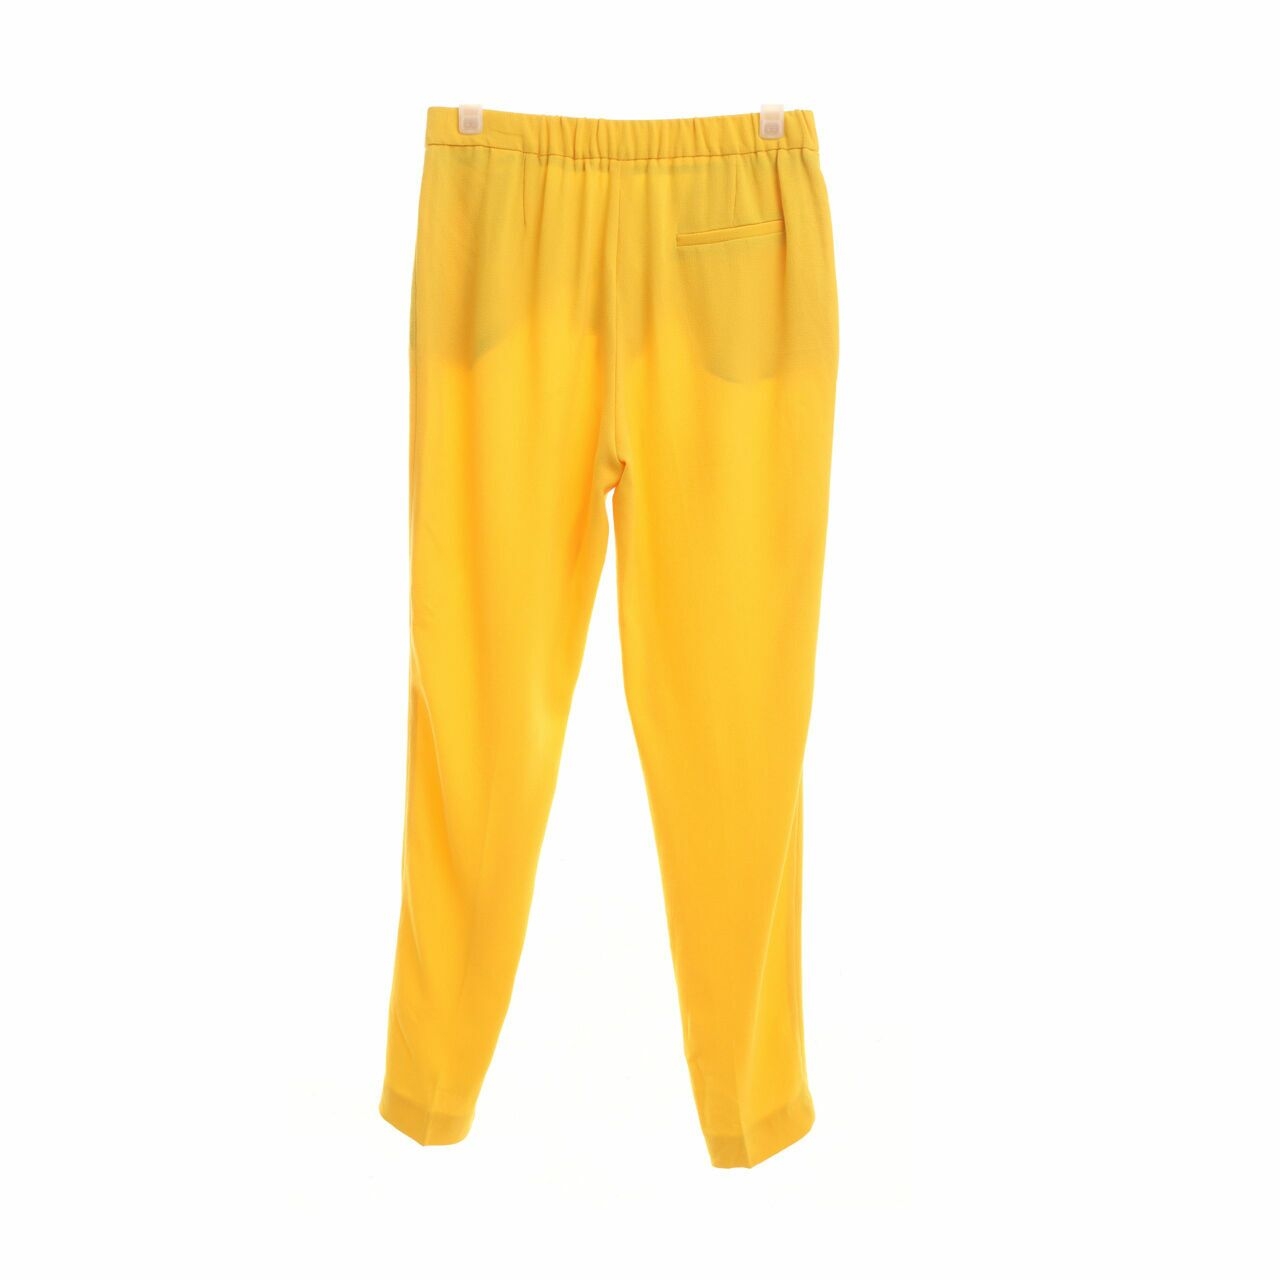 Zara Yellow Long Pants